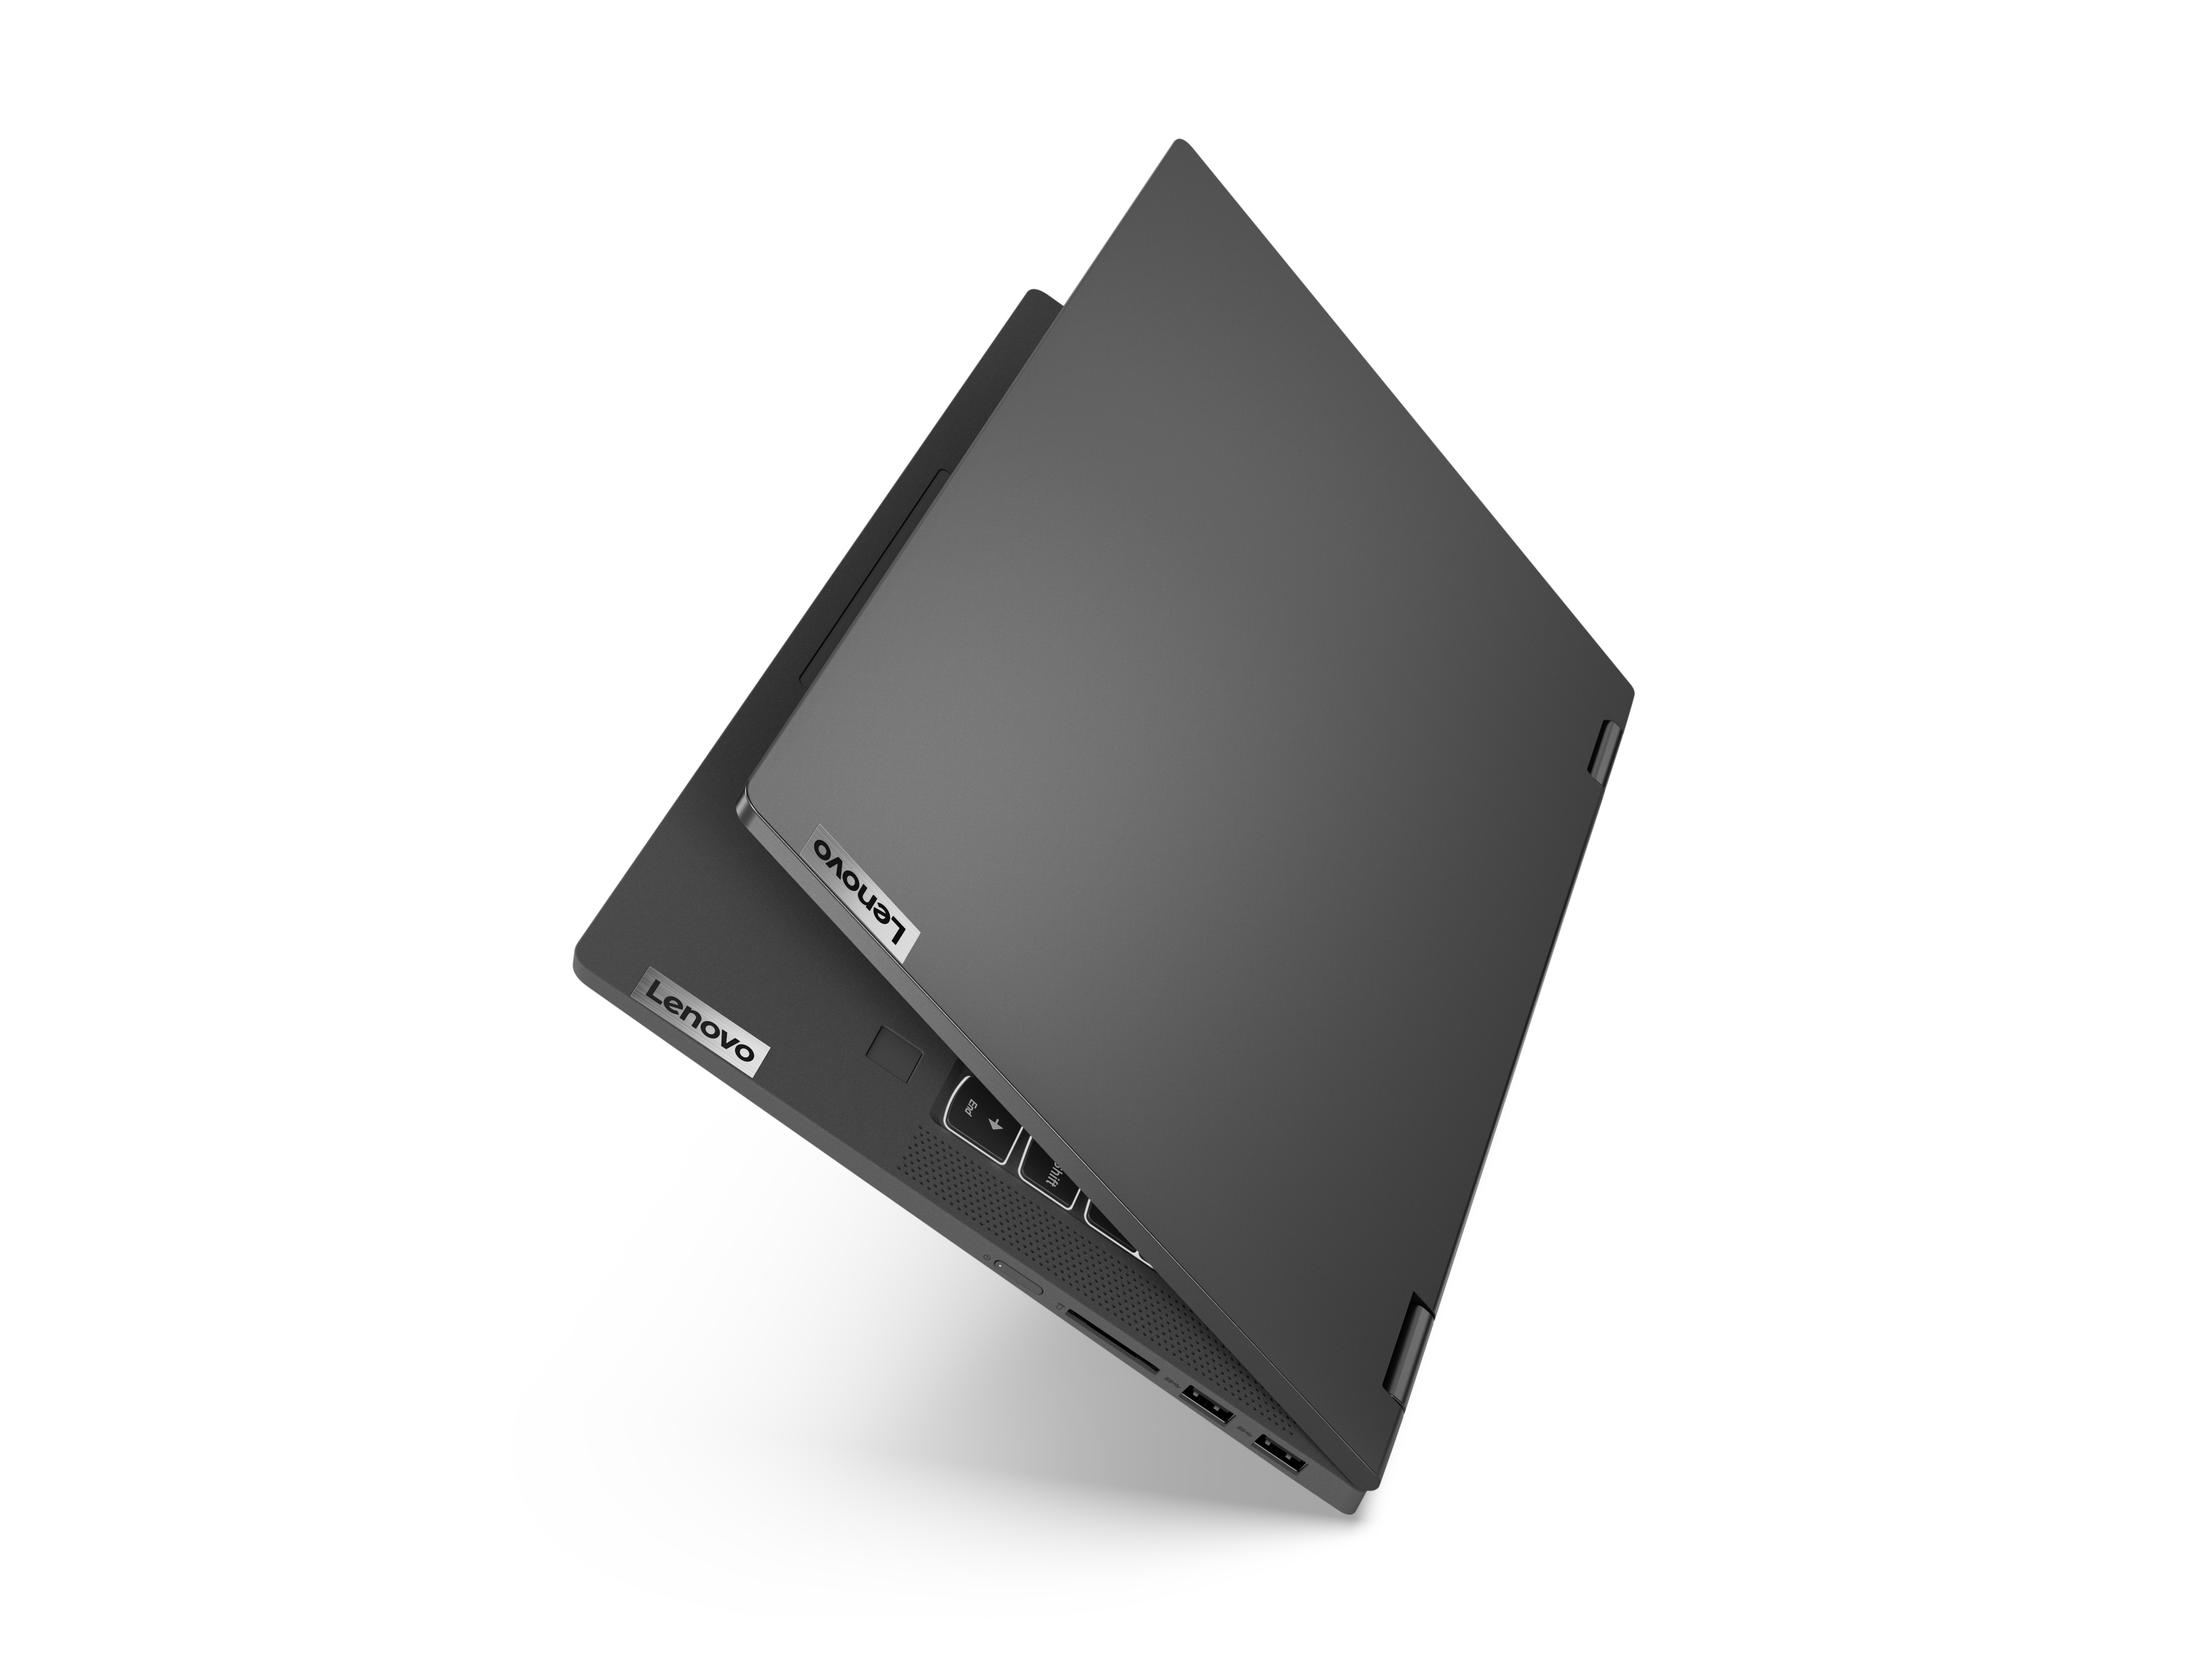 Lenovo Ideapad Flex 5i 14" FHD 2-in-1 Touchscreen Laptop, Intel Core i3, 4GB RAM, 128GB SSD, Graphite Gray, Windows 10, 82HS007CUS - image 4 of 14